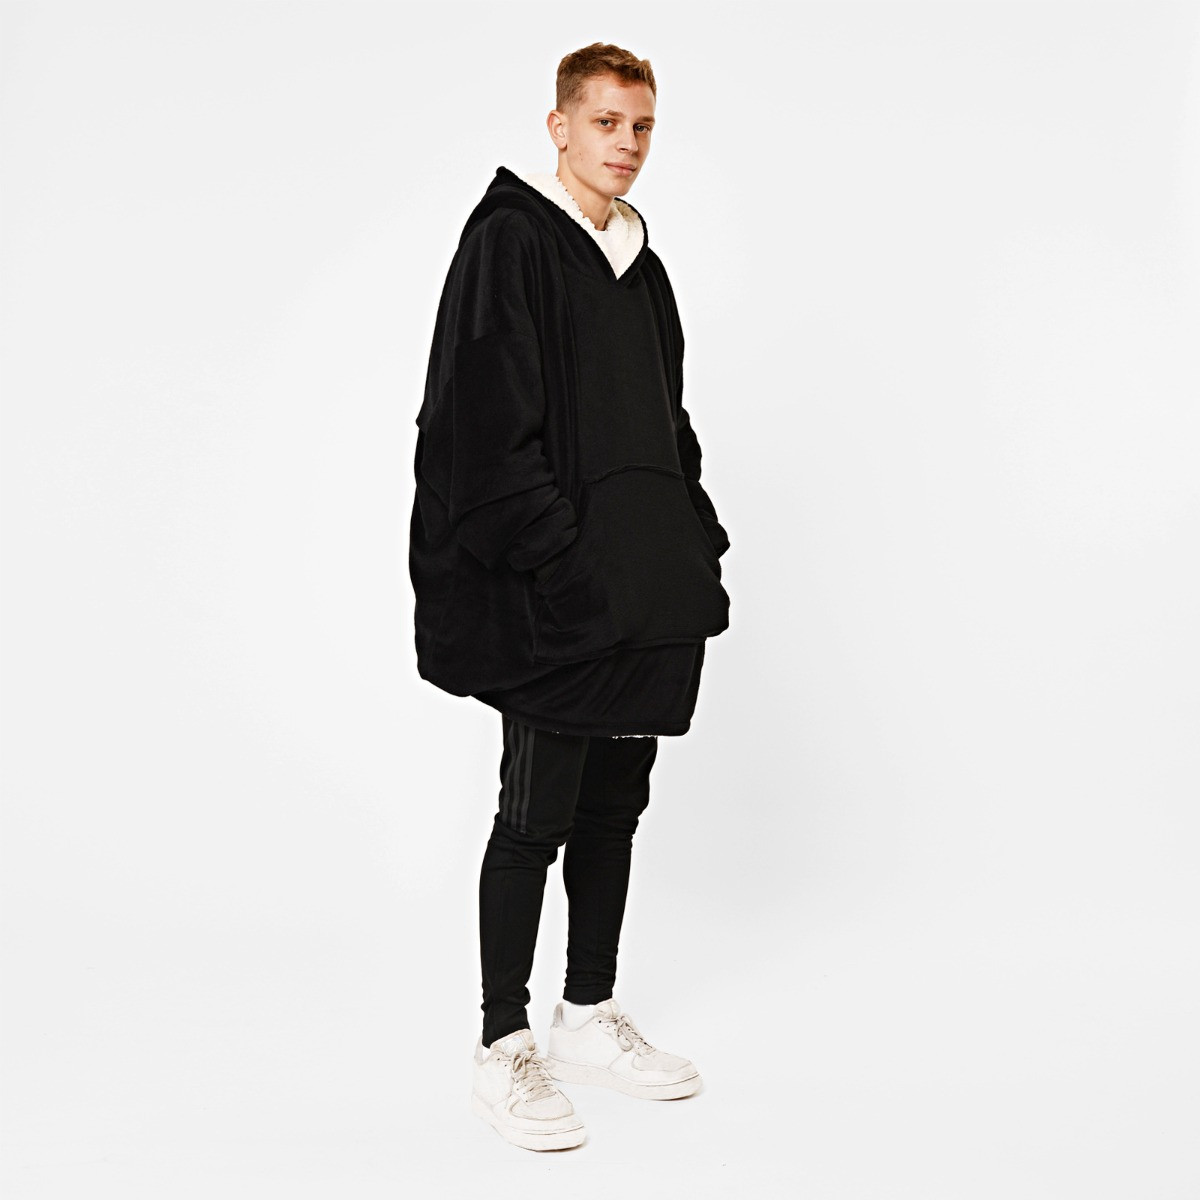 Sienna Supersoft Hoodie Blanket, One Size - Black